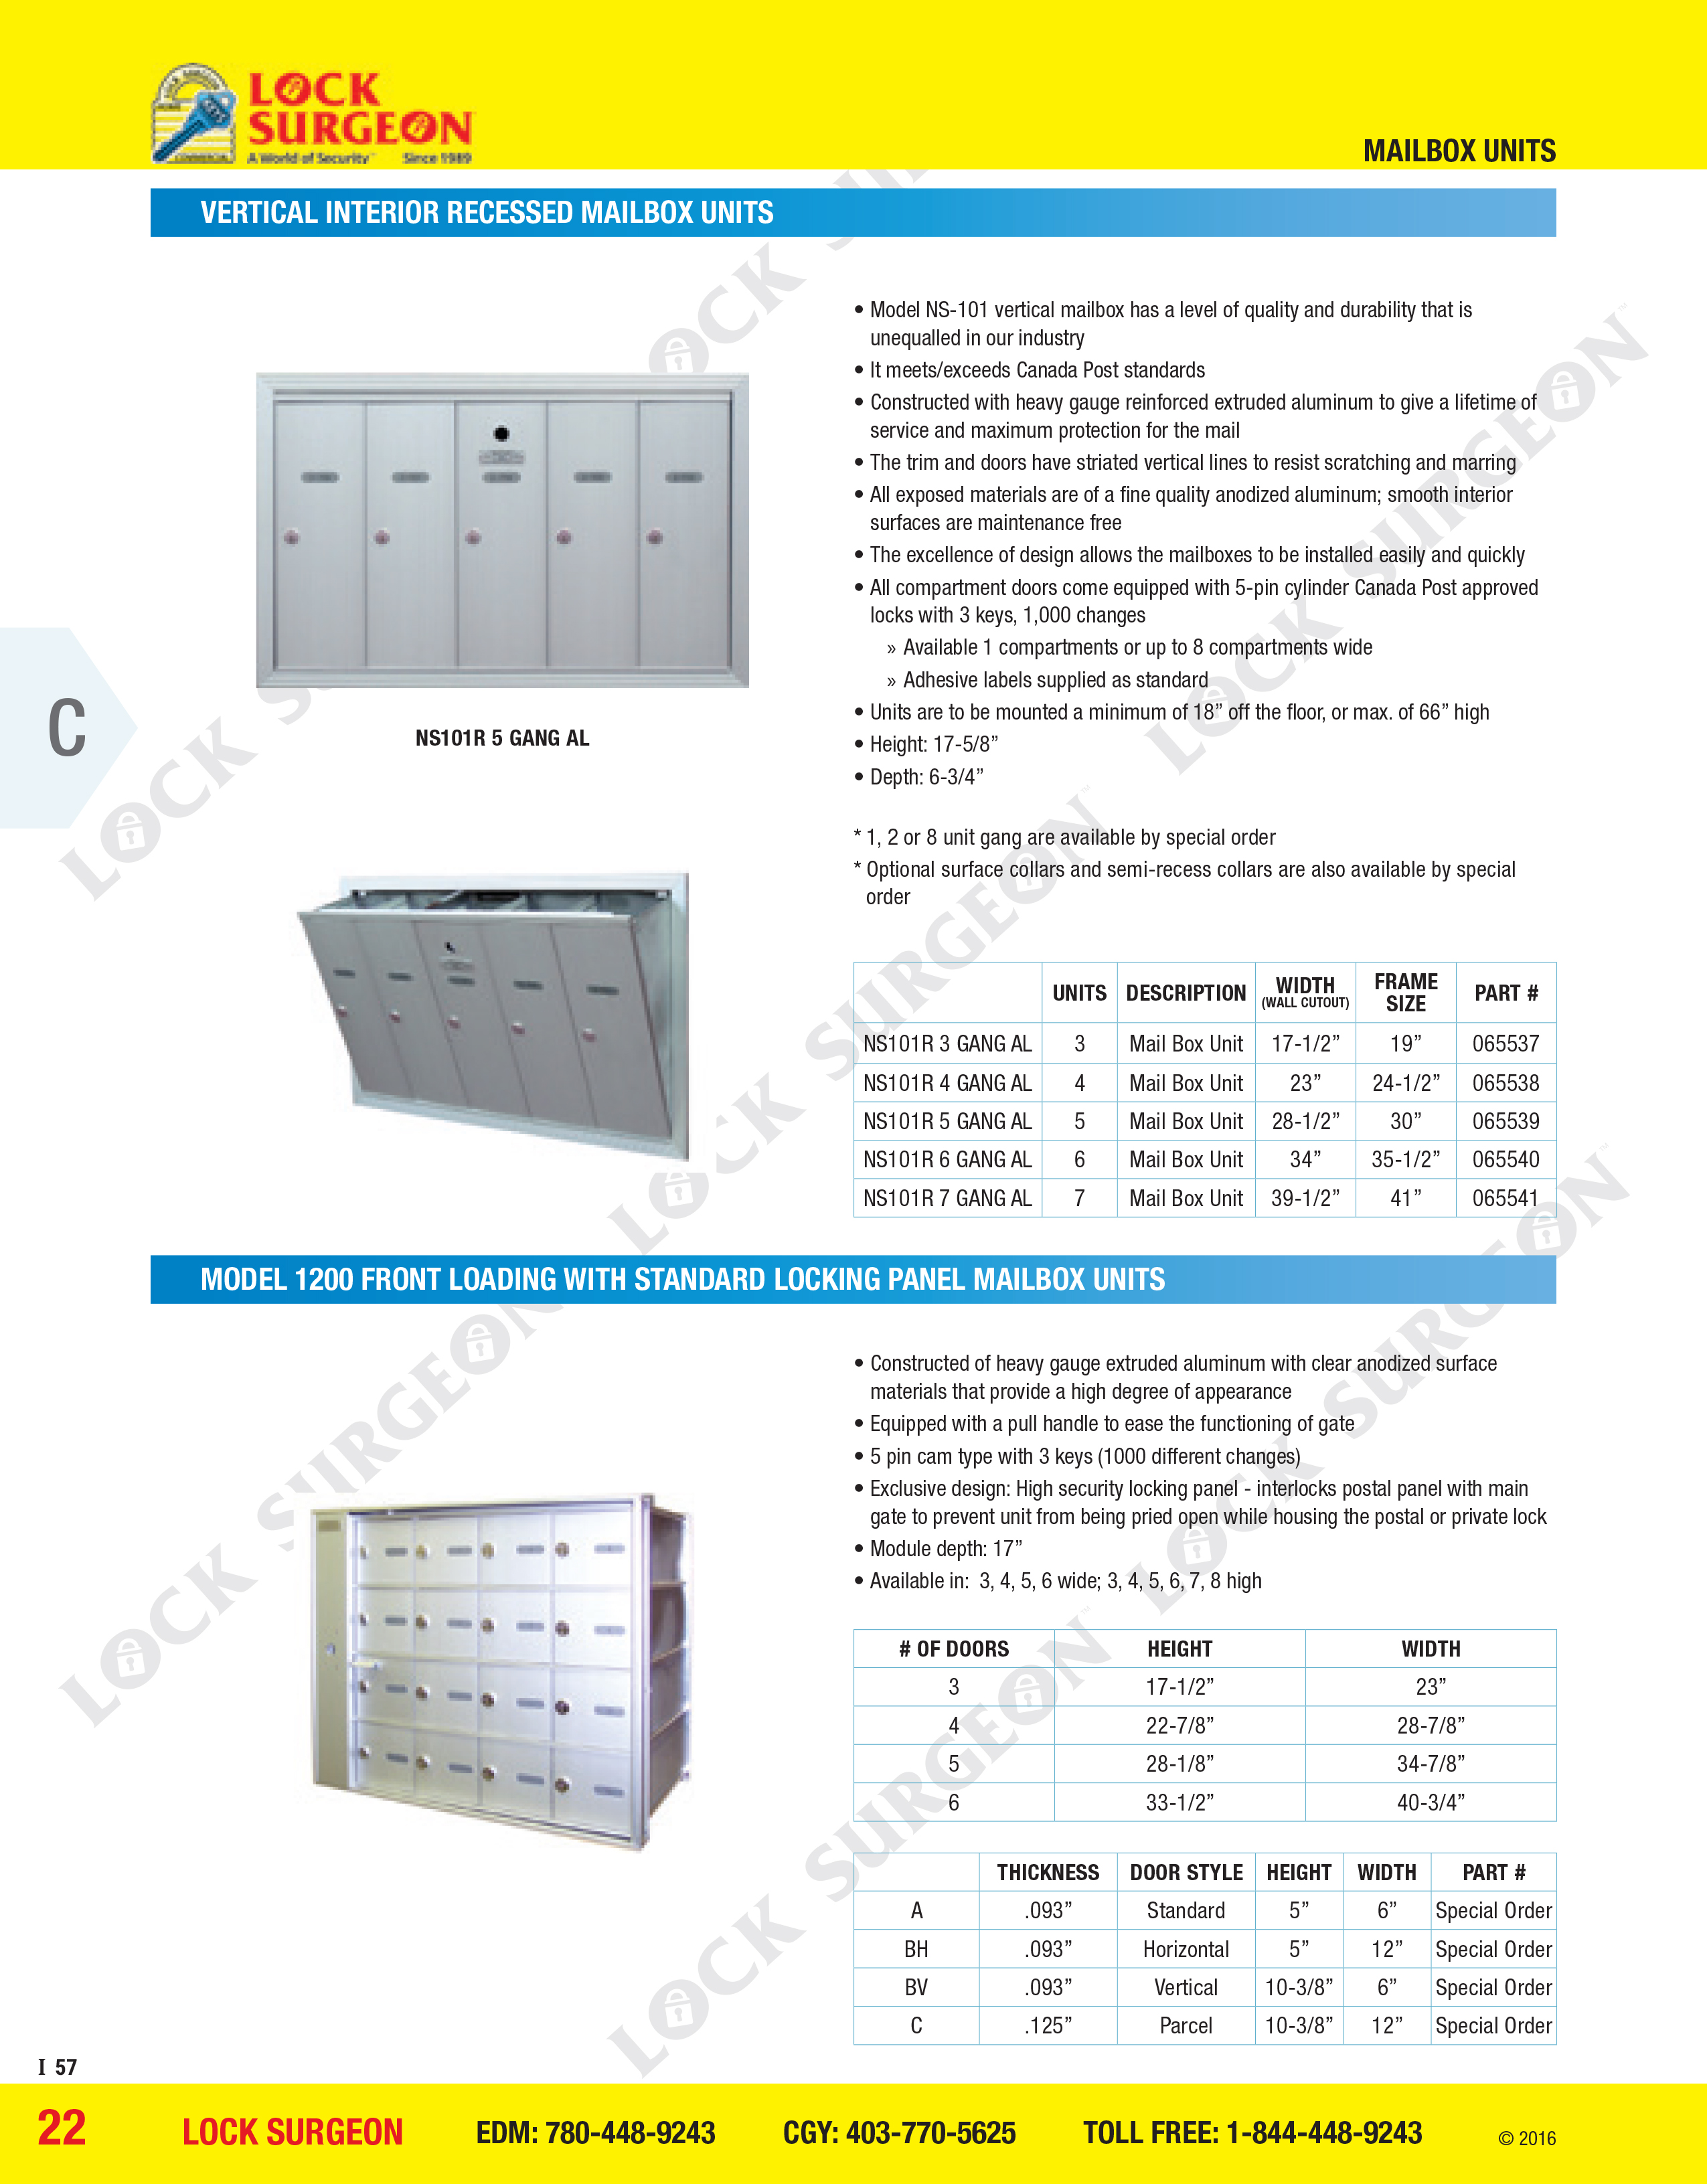 Vertical interior recessed mailbox units, Model 1200 front loading standard locking panel mailbox.